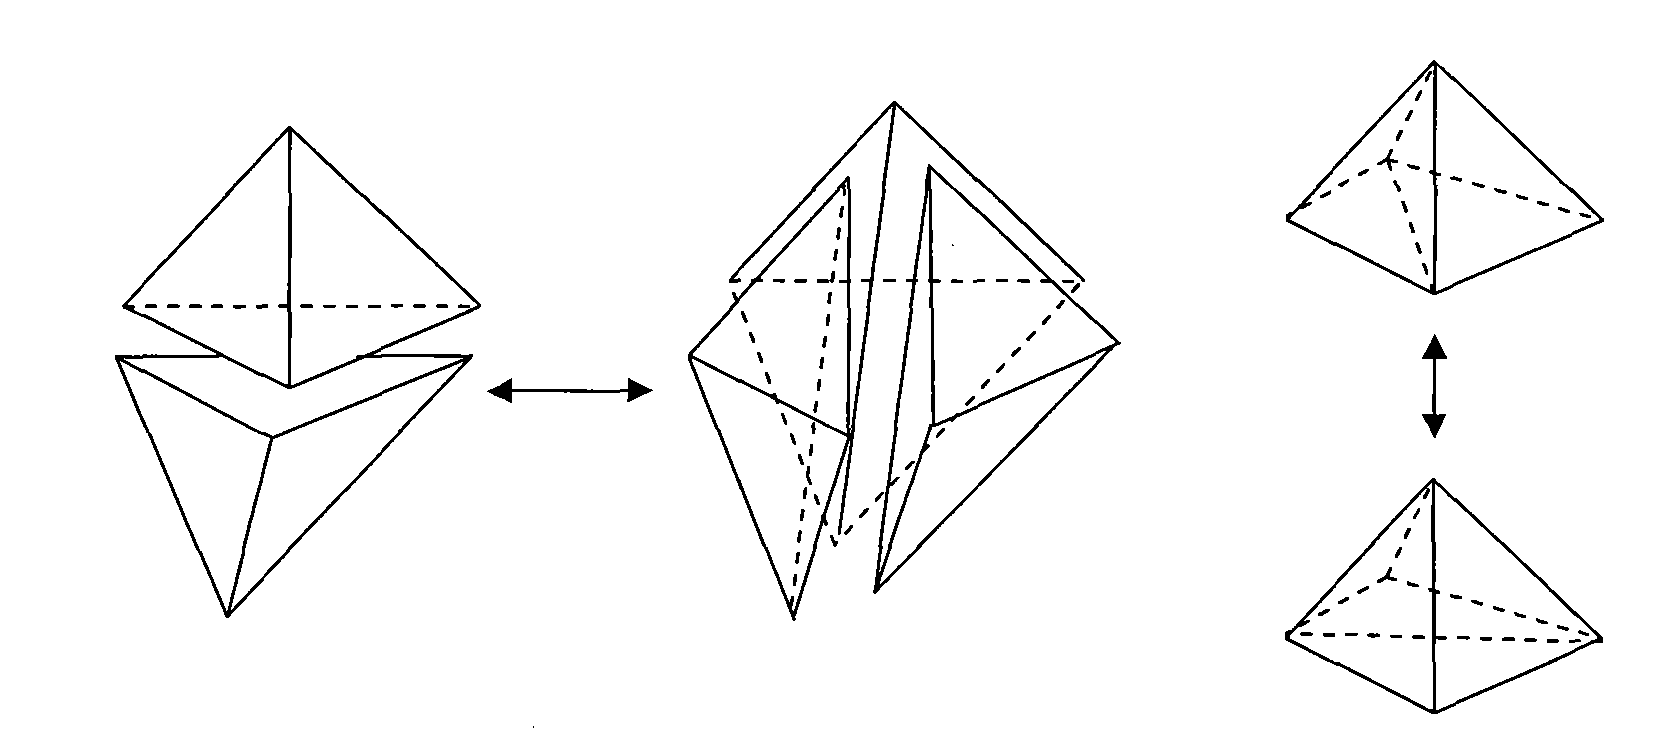 Discrete algorithm for tetrahedral mesh considering feature constraint